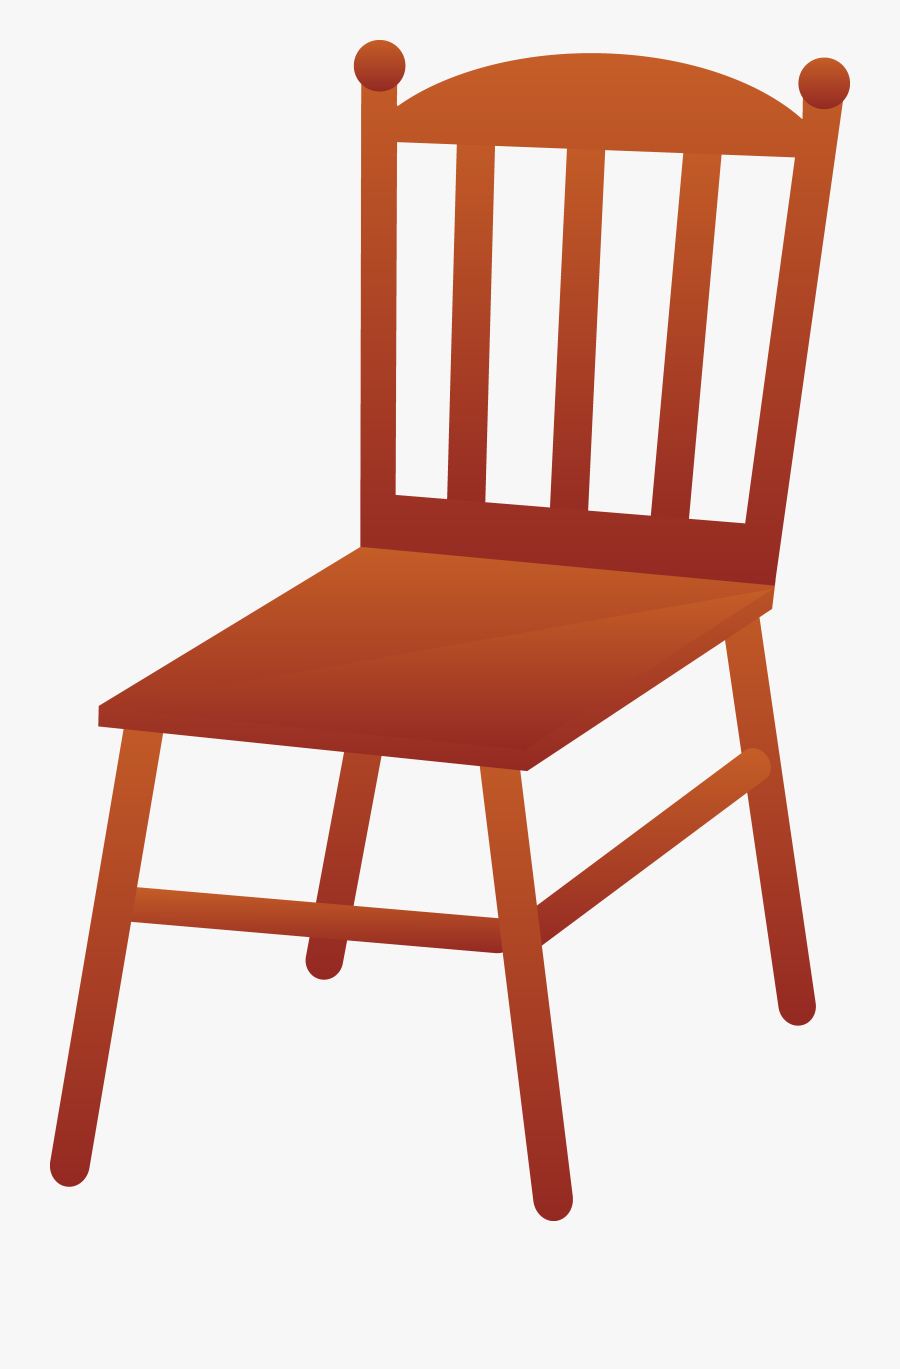 Chairs Clipart - Clip Art Chair Transparent, Transparent Clipart